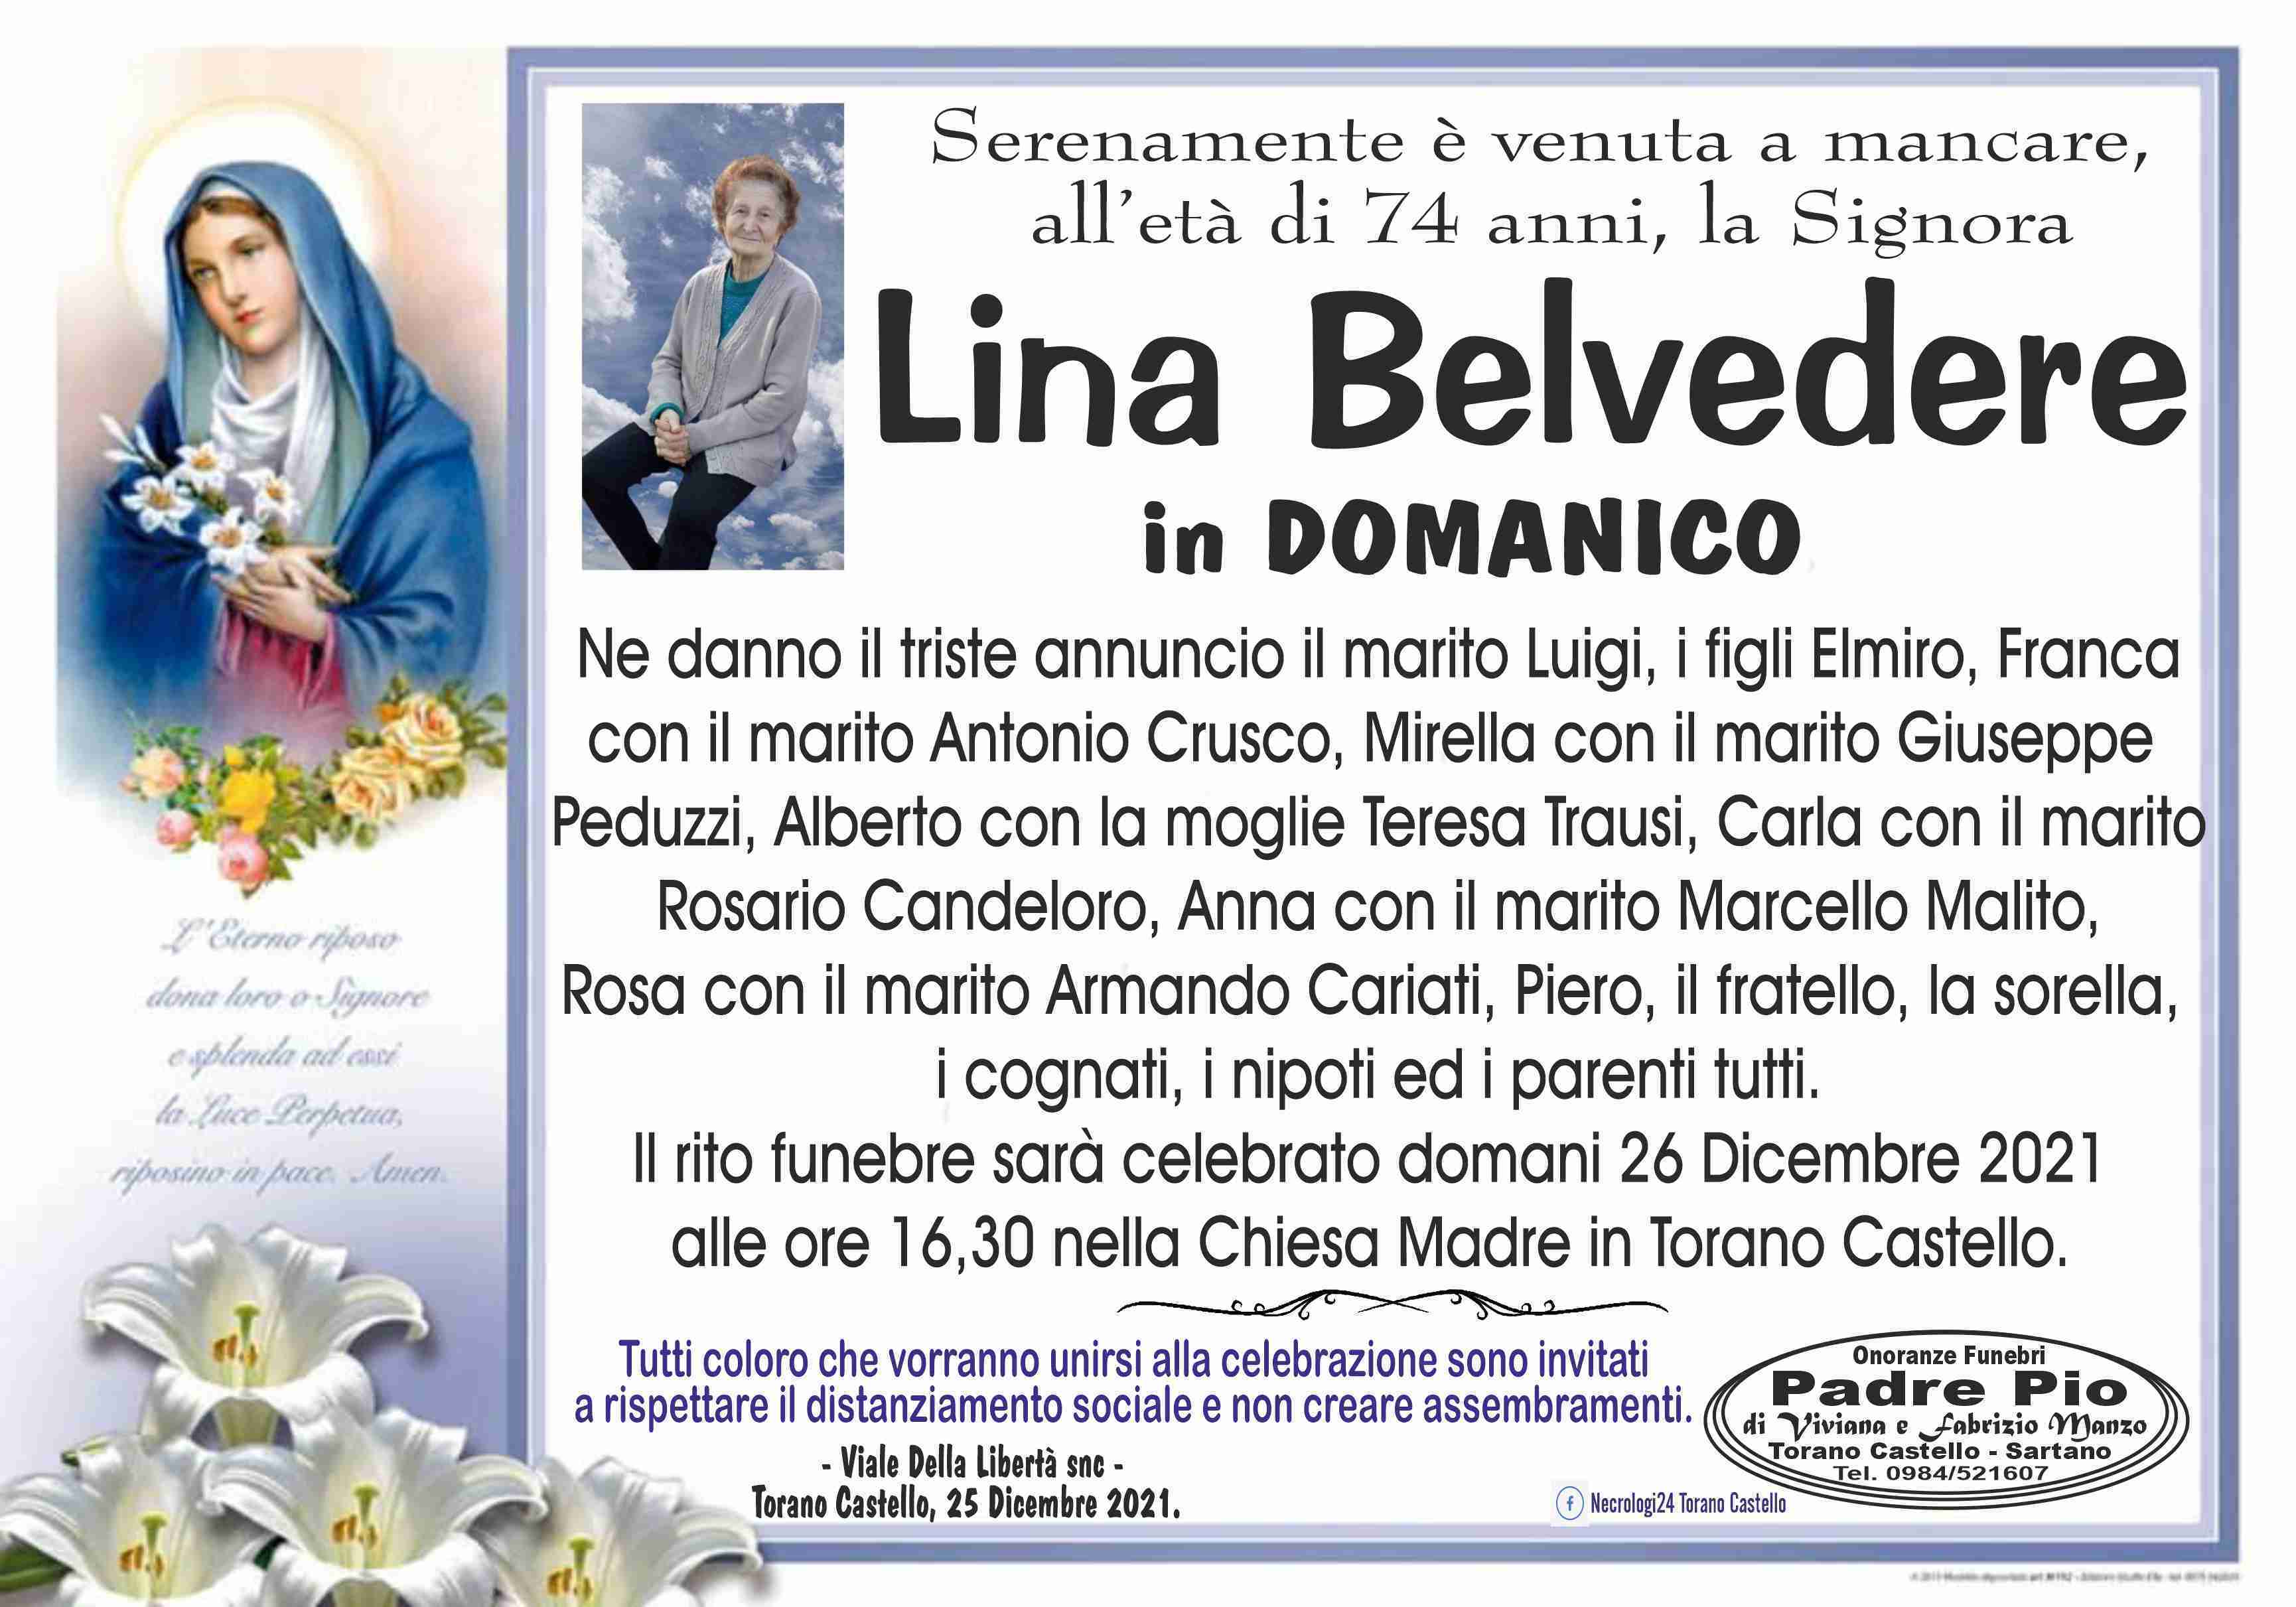 Lina Belvedere